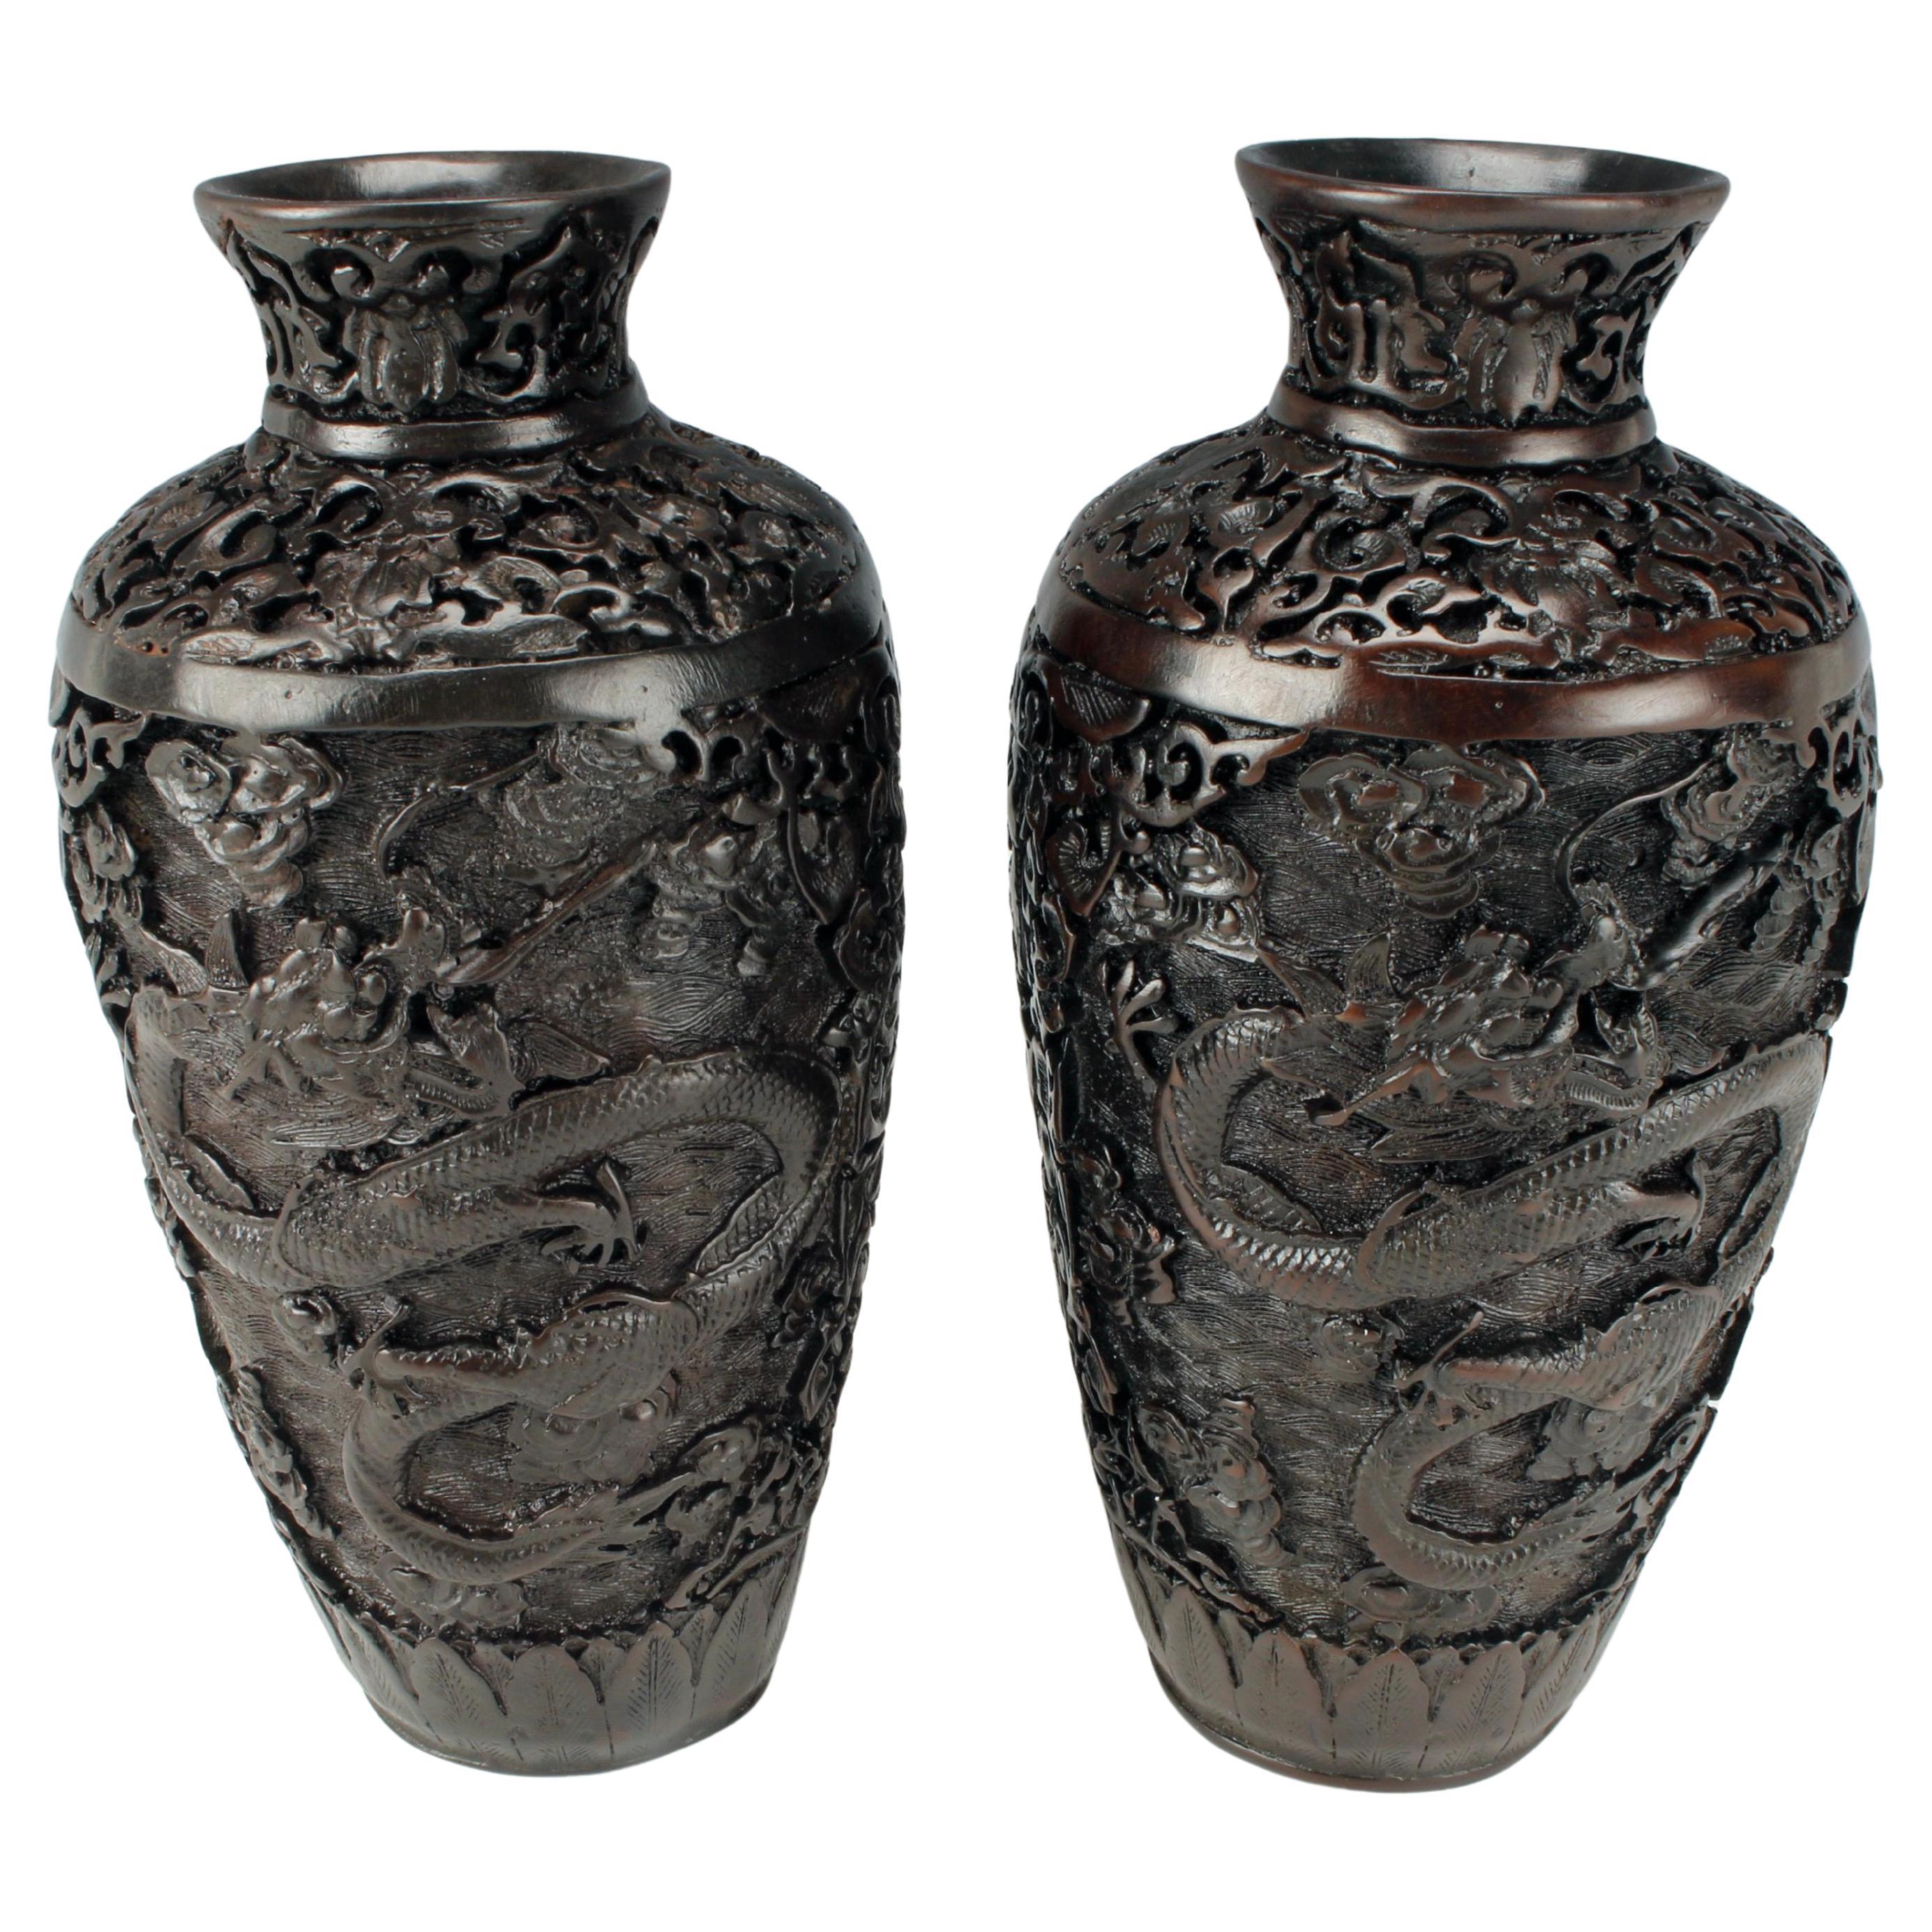 Paar japanische Vasen mit geschnitztem Metalldrachen aus Metall